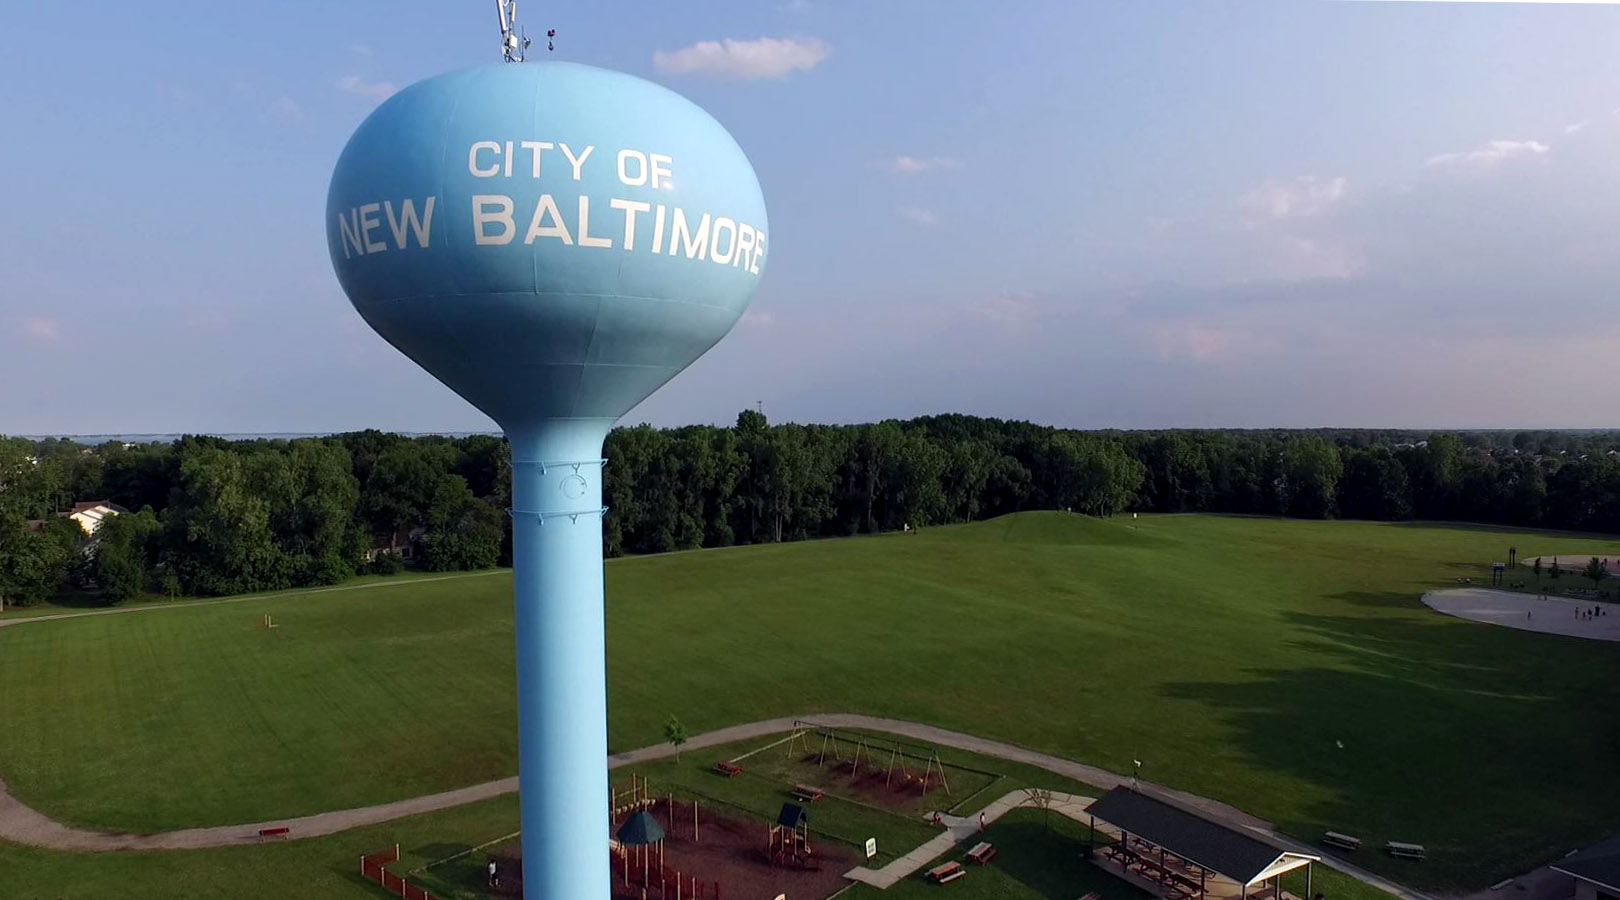 New Baltimore MI - Blue Water Tower - Maynard Park.jpg